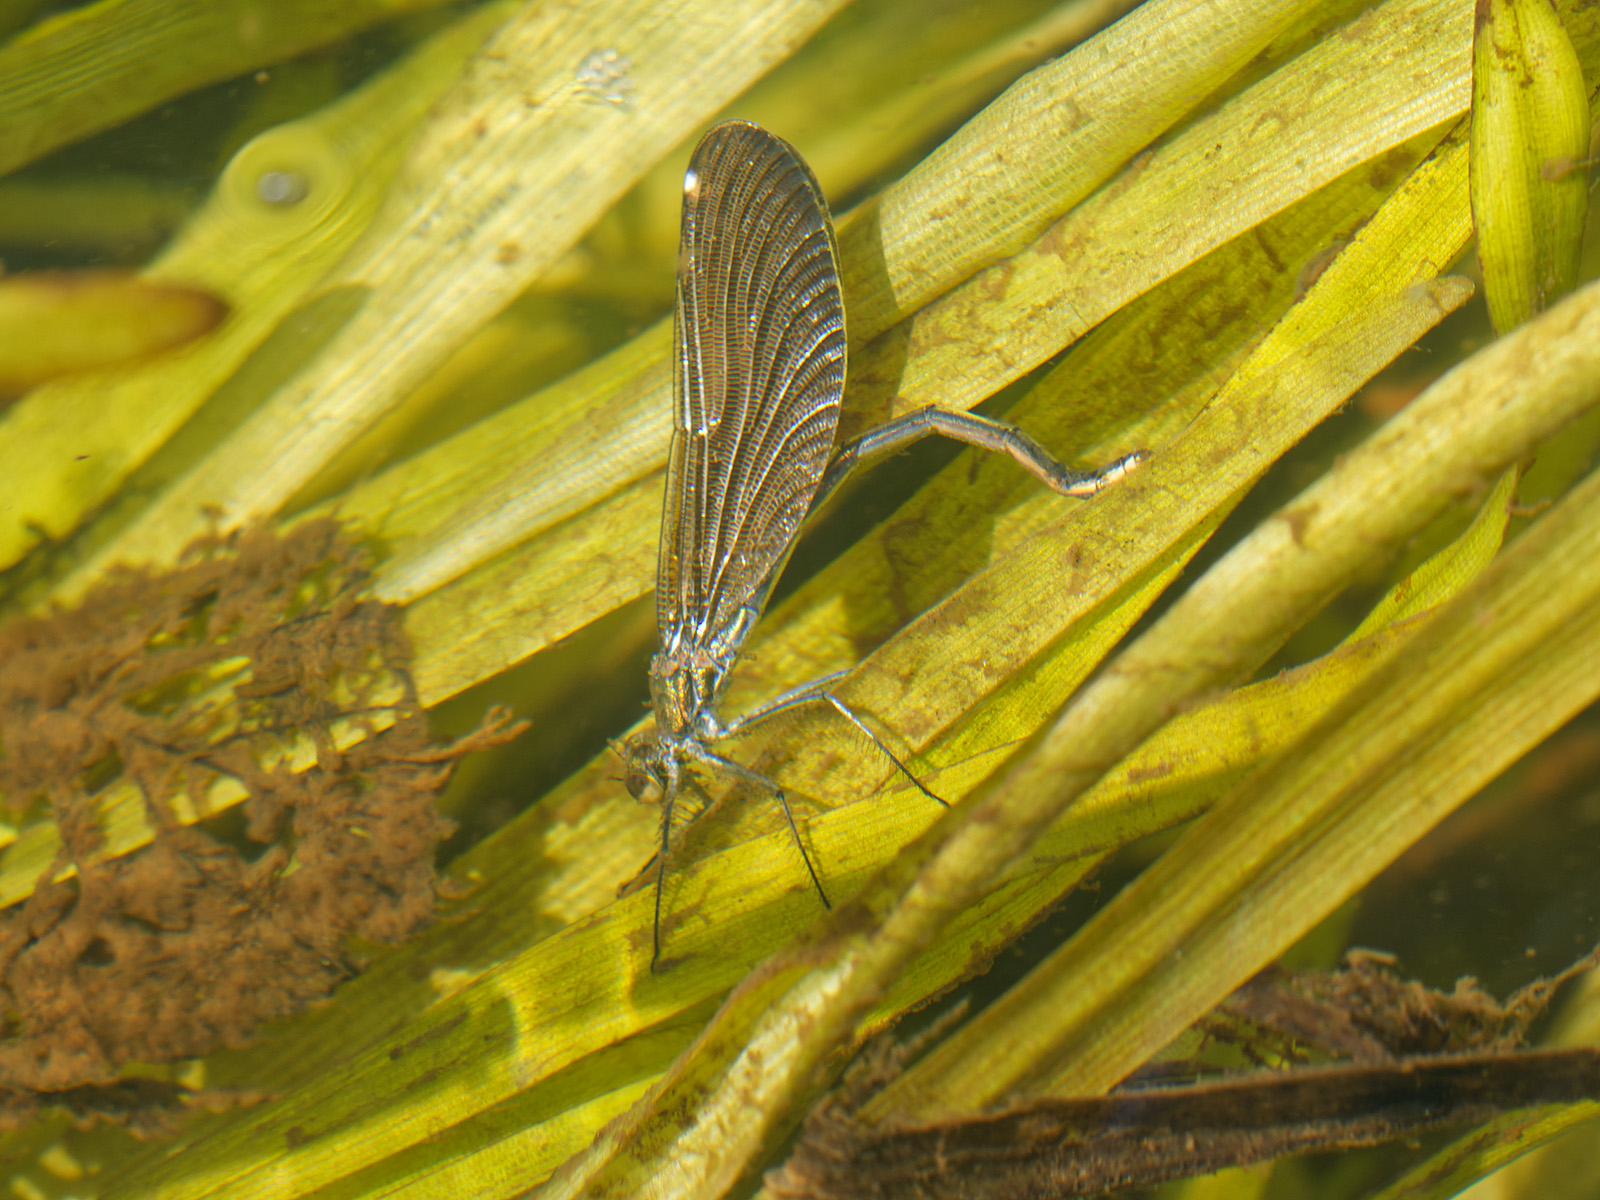 Calopteryx virgo, female, ovipositing under water